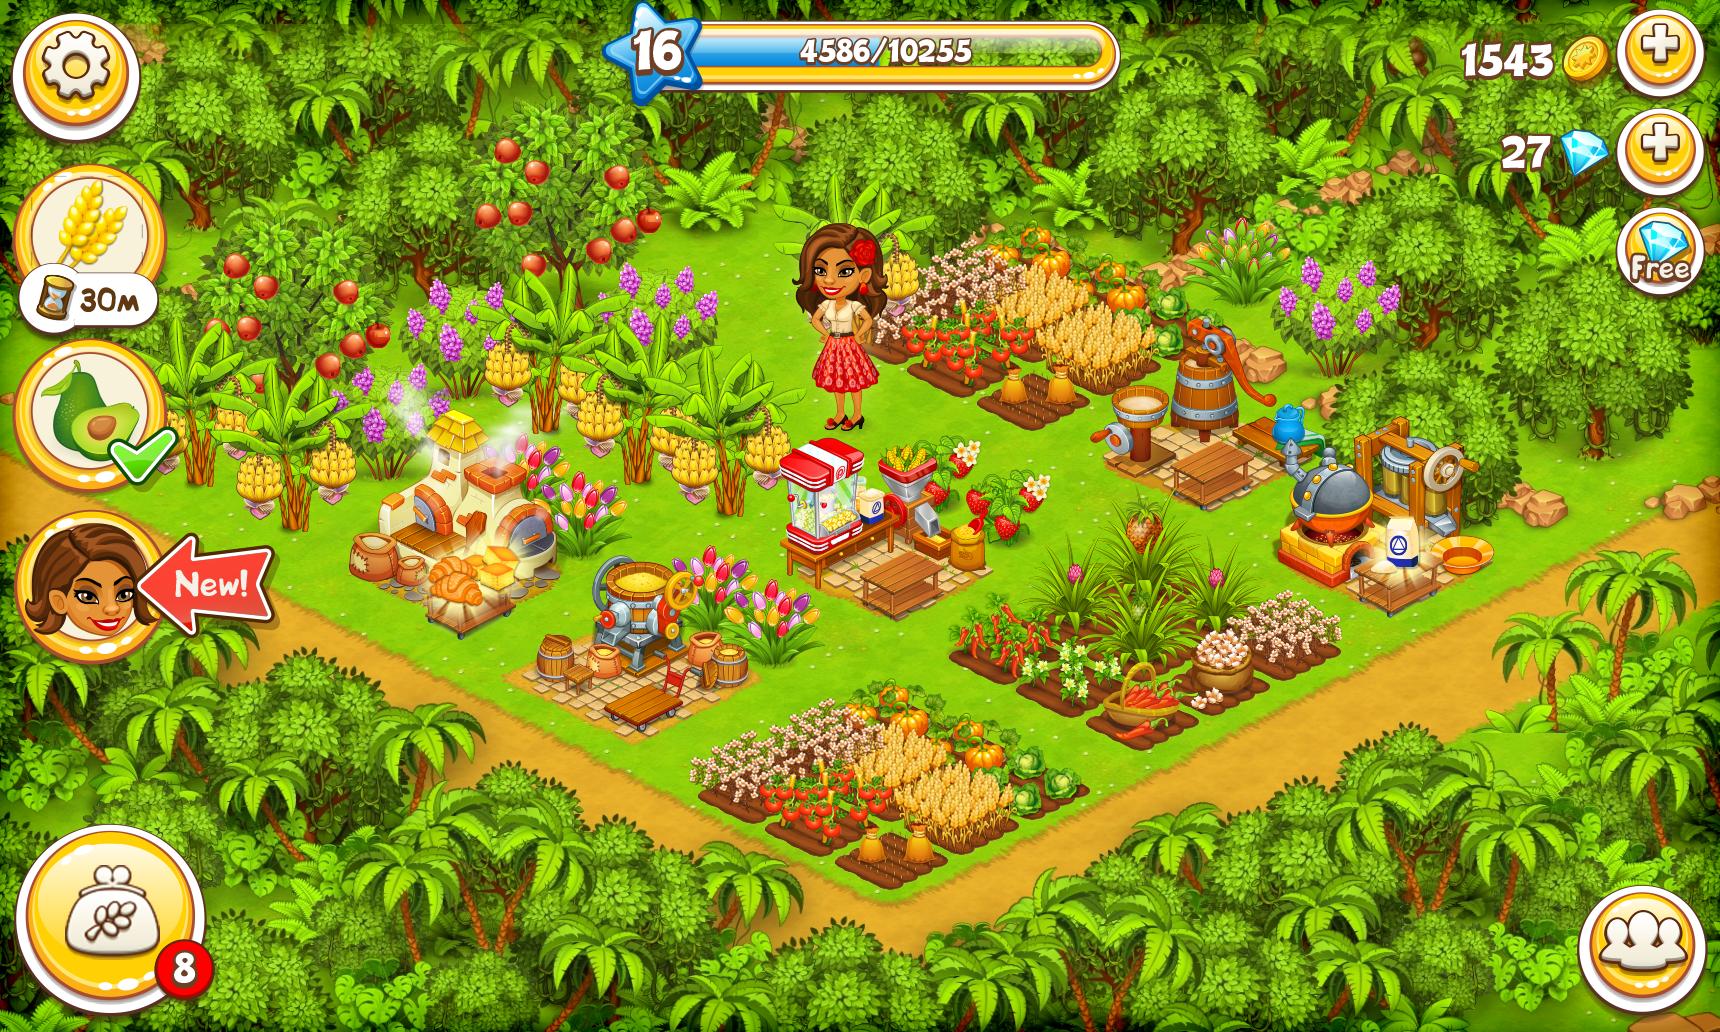 Farm Paradise Fun farm trade game at lost island 2.17 Screenshot 16